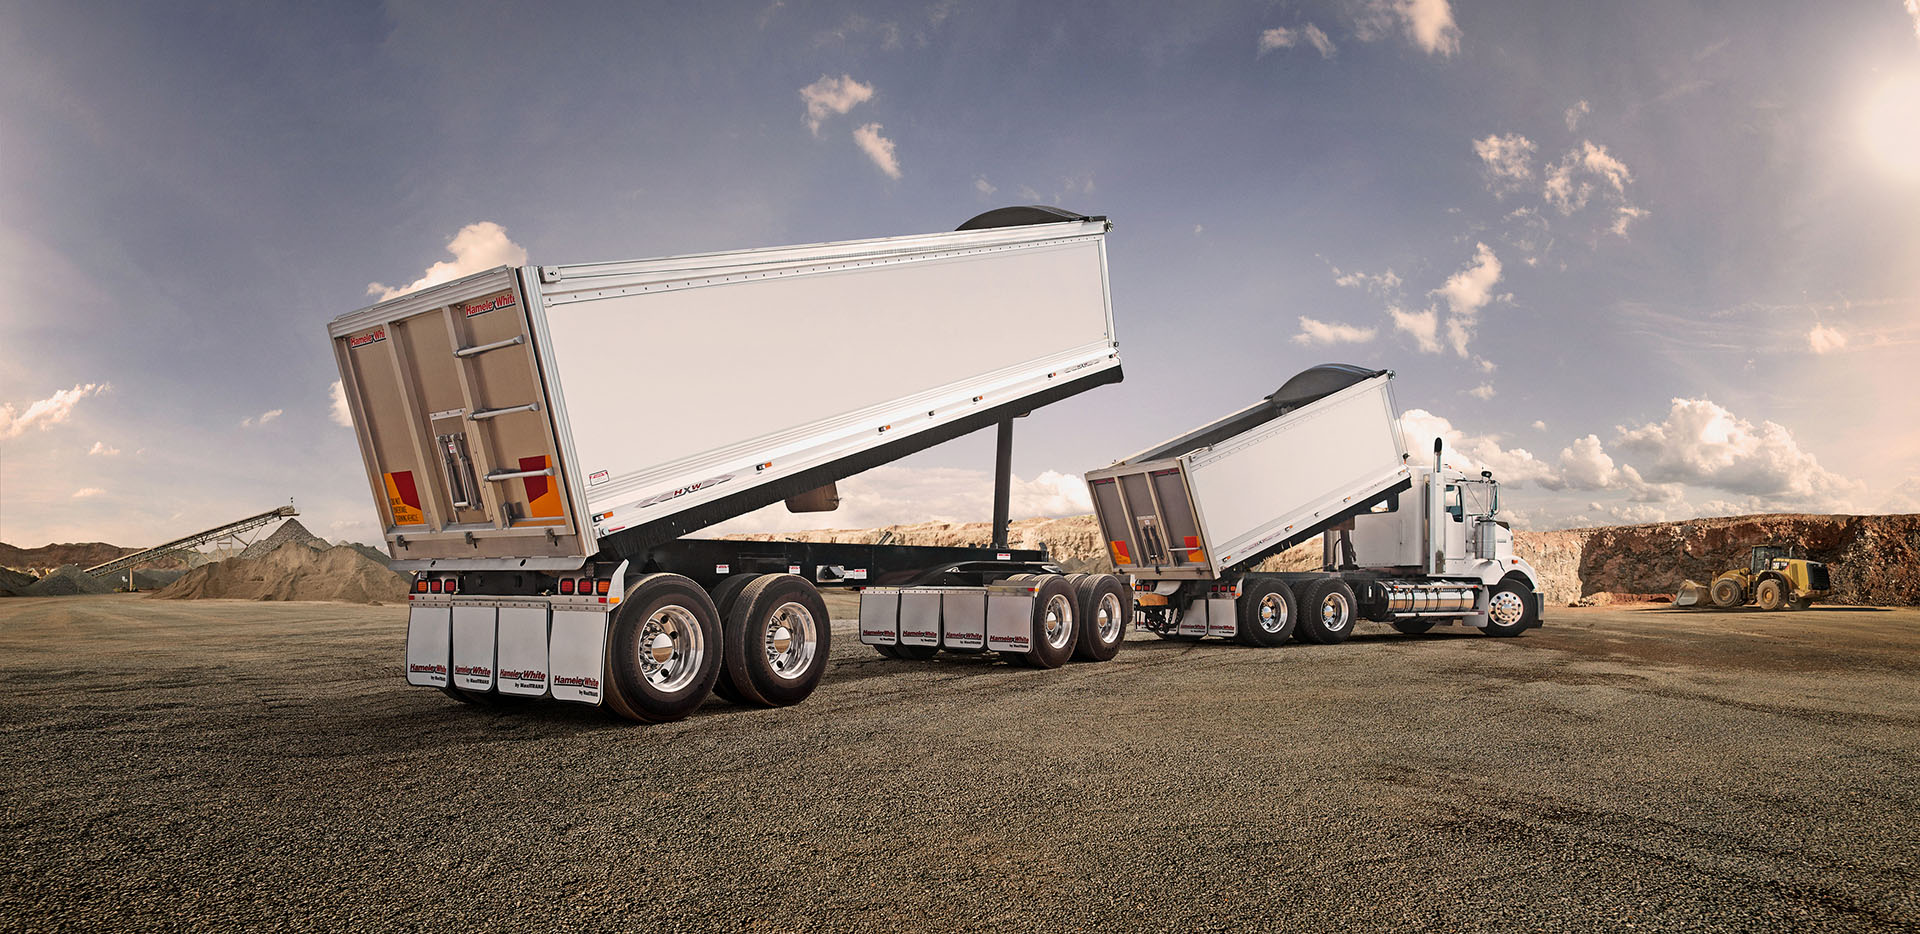 budget australia hamelex white infrastructure equipment trailers